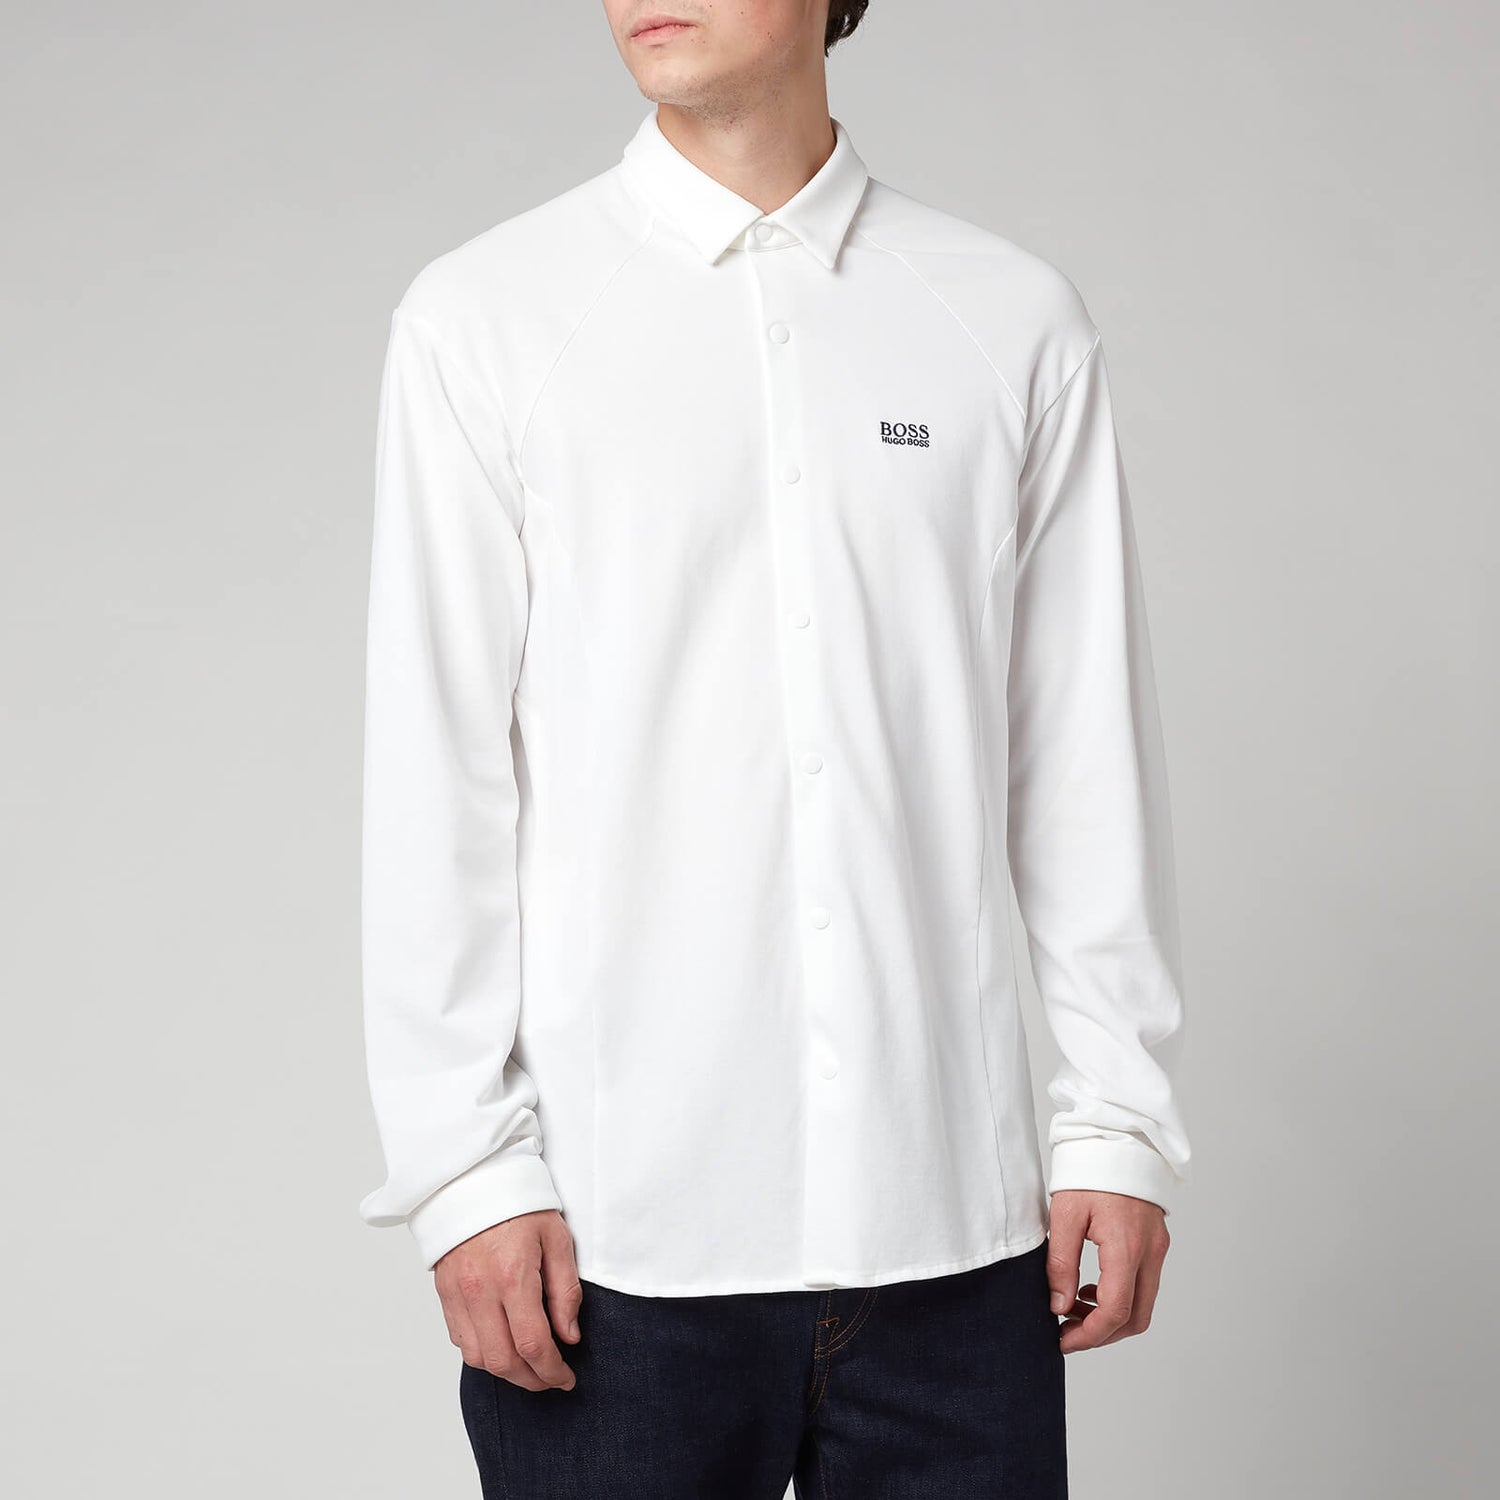 BOSS Athleisure Men's Banzi Long Sleeve Shirt - White